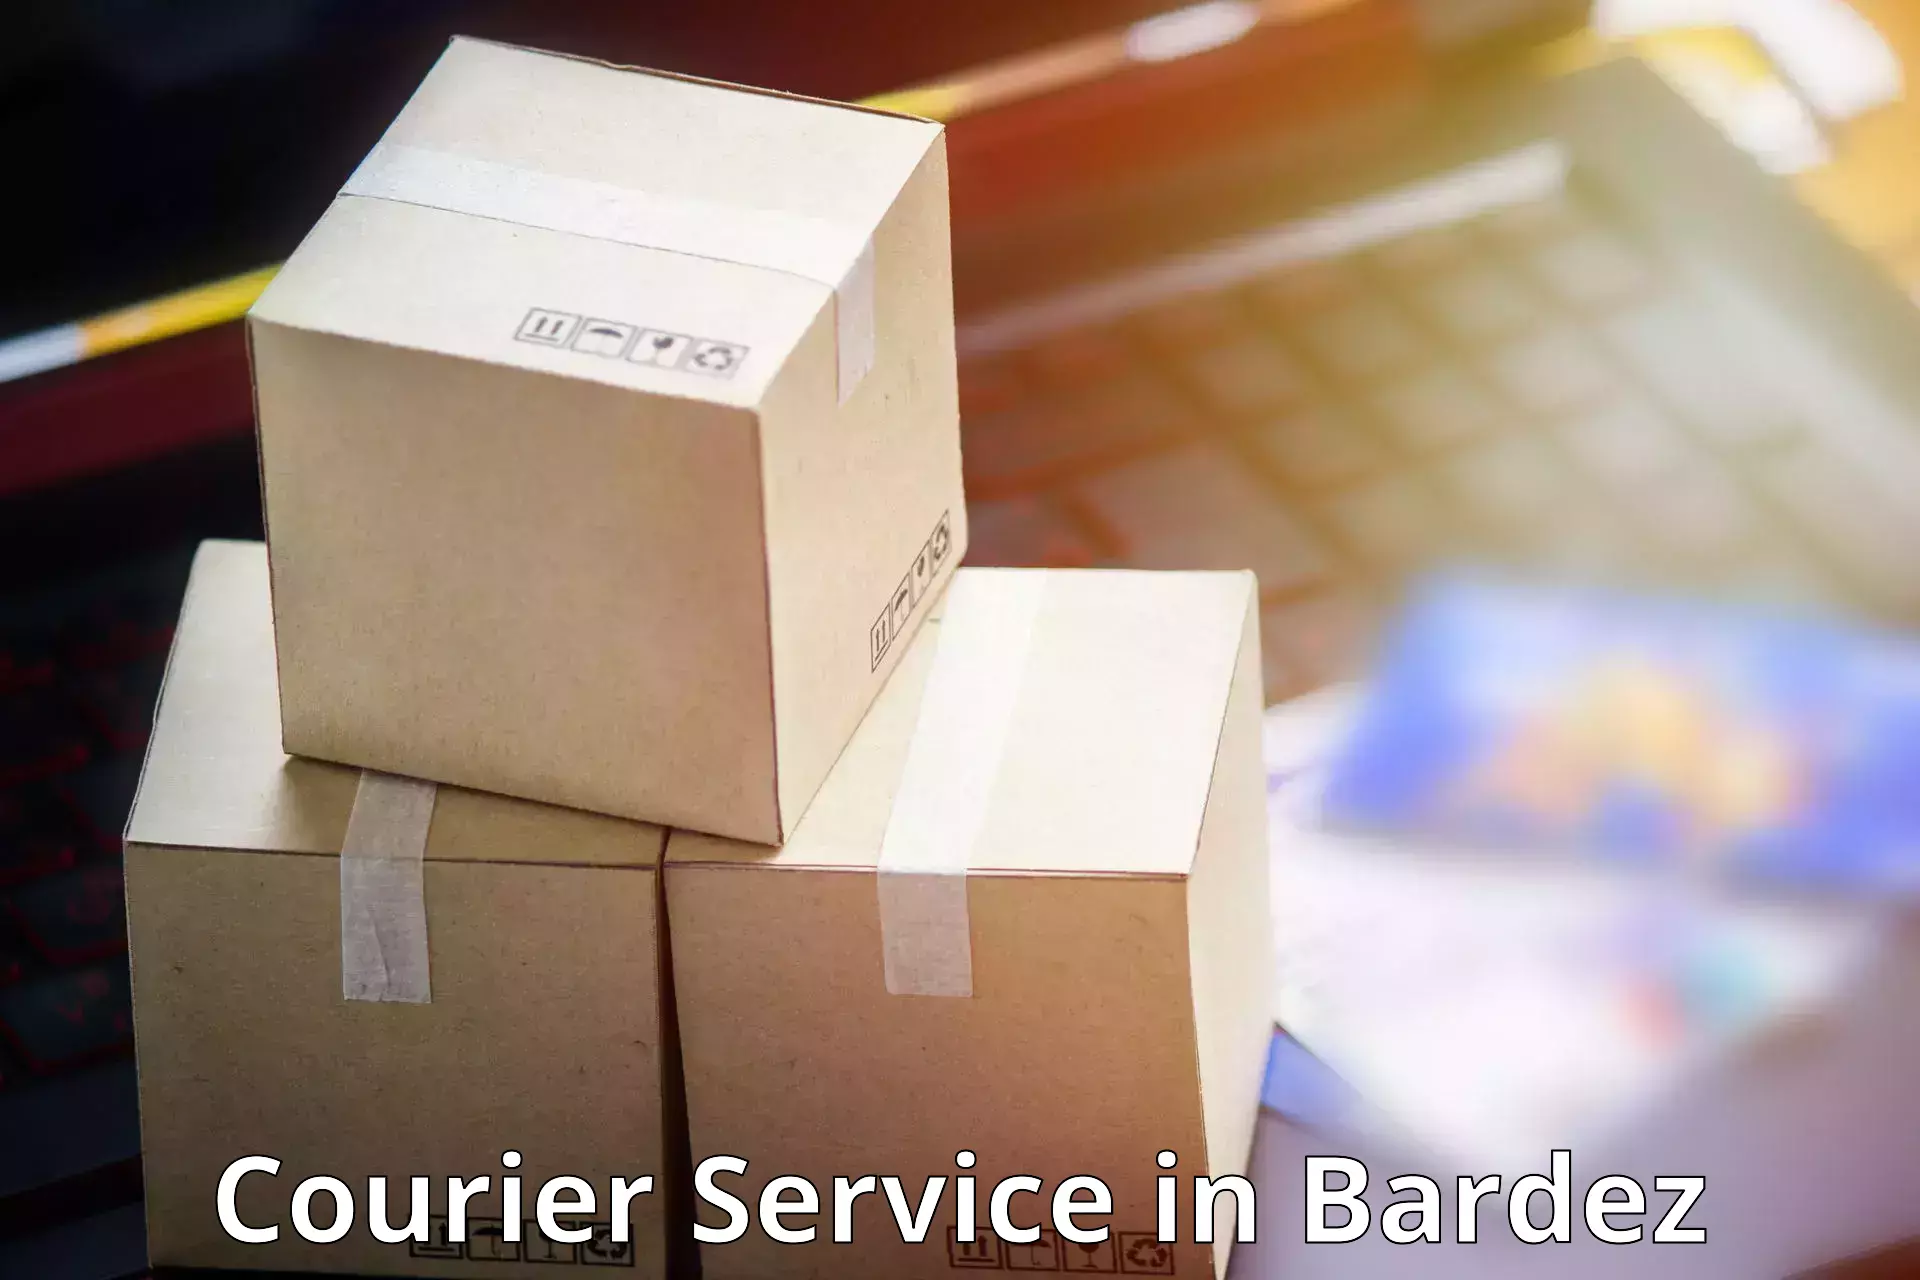 Remote area delivery in Bardez